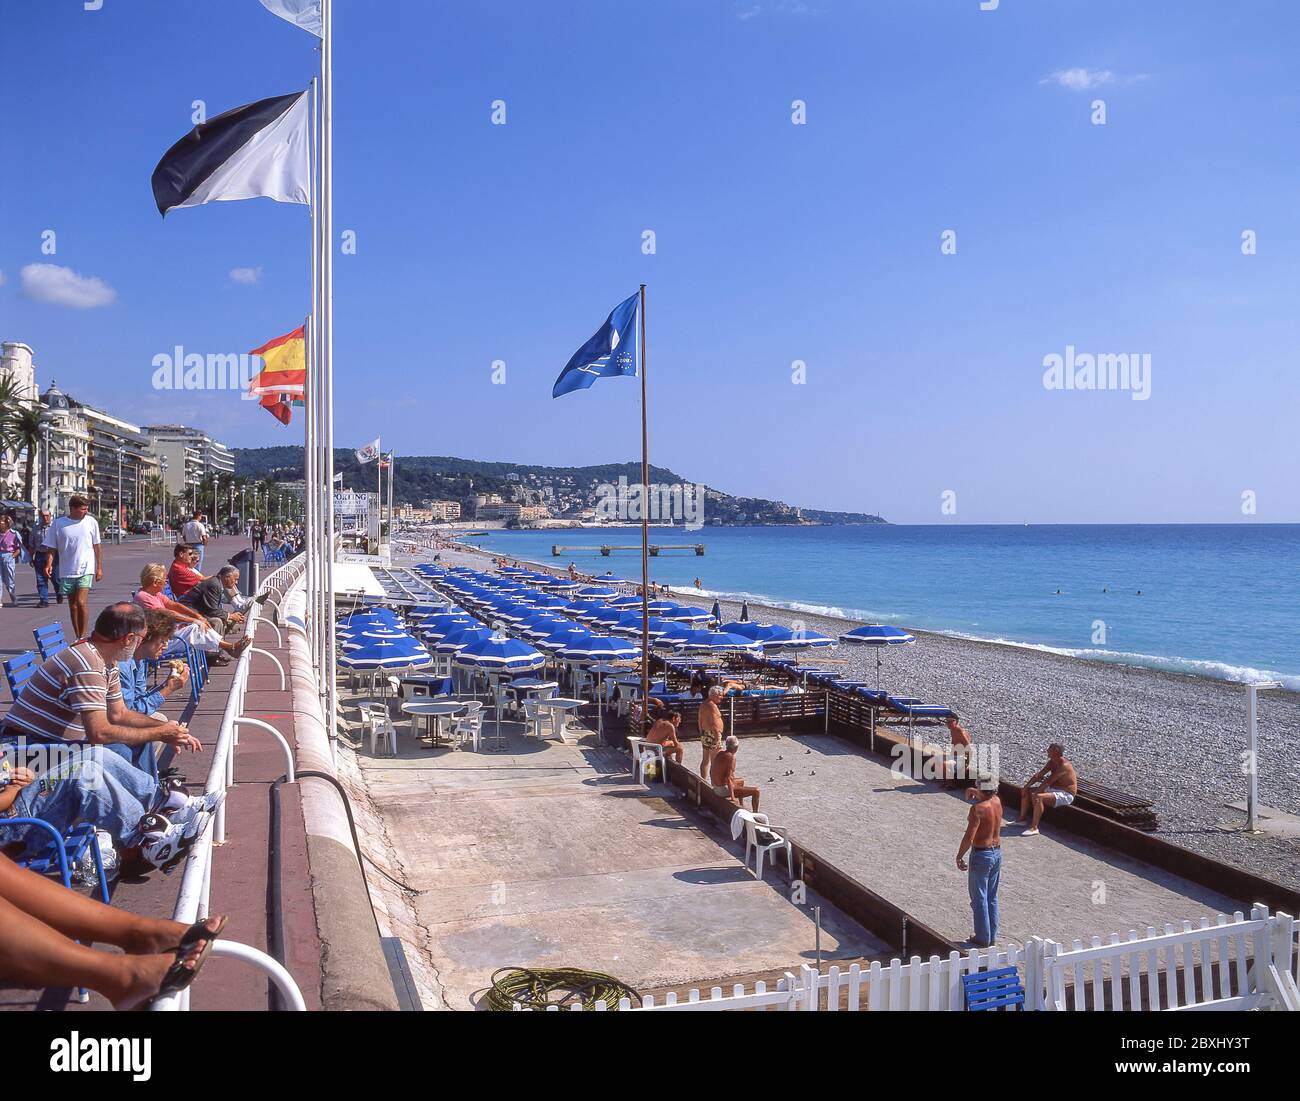 Boule-Spiel in der Strandbar Splendid Hotel, Nizza, Alpes-Maritimes, Provence-Alpes-Côte d'Azur, Frankreich Stockfoto